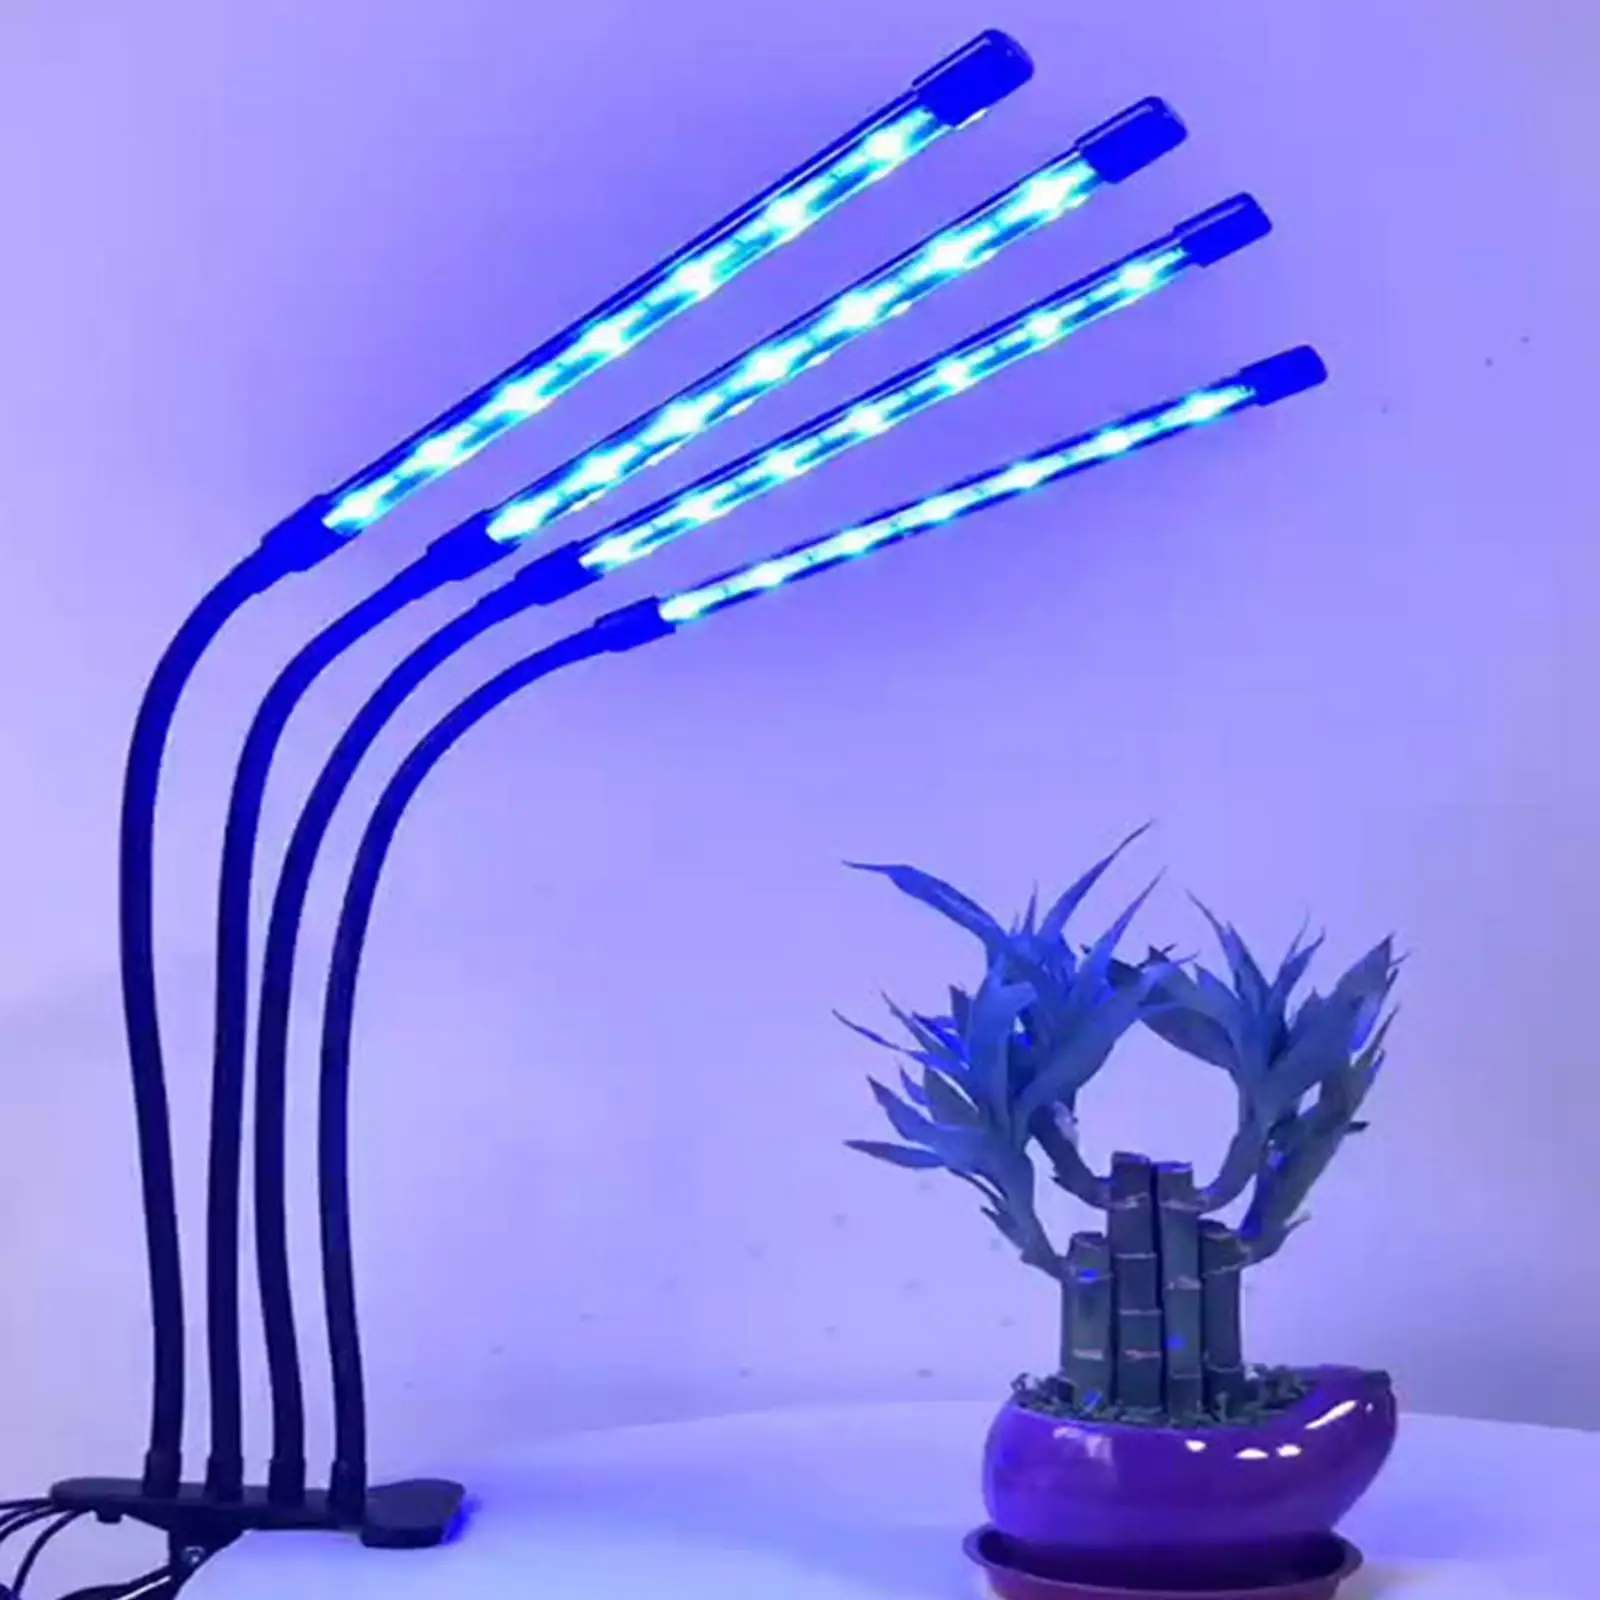 Plant Light Adjustable Gooseneck LED Grow Light Clip Plant Growing Lamp for Vegetable Planting Cultivation Gardening Flowers